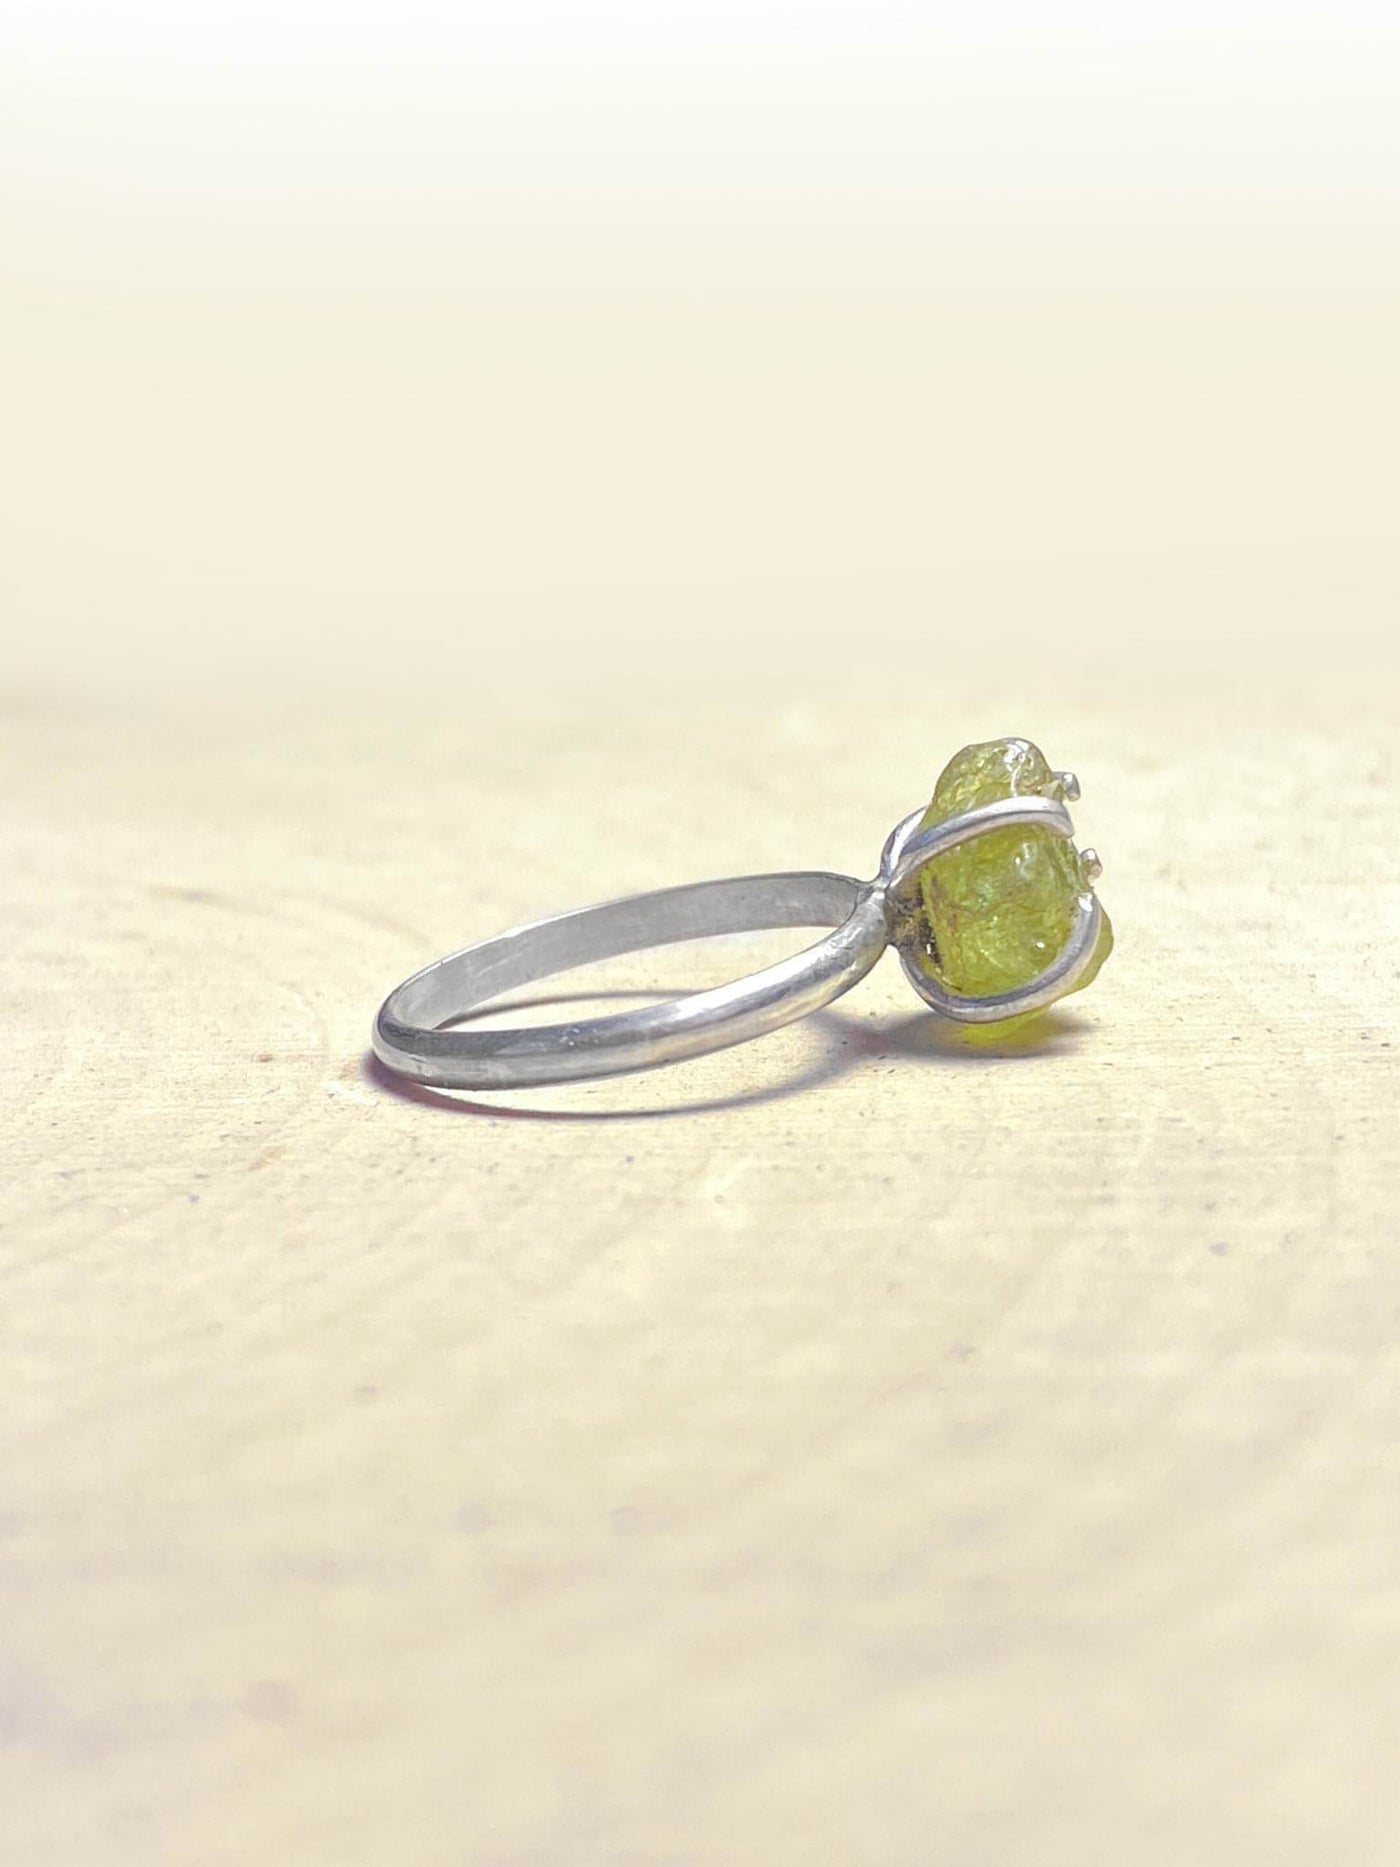 Green garnet ring